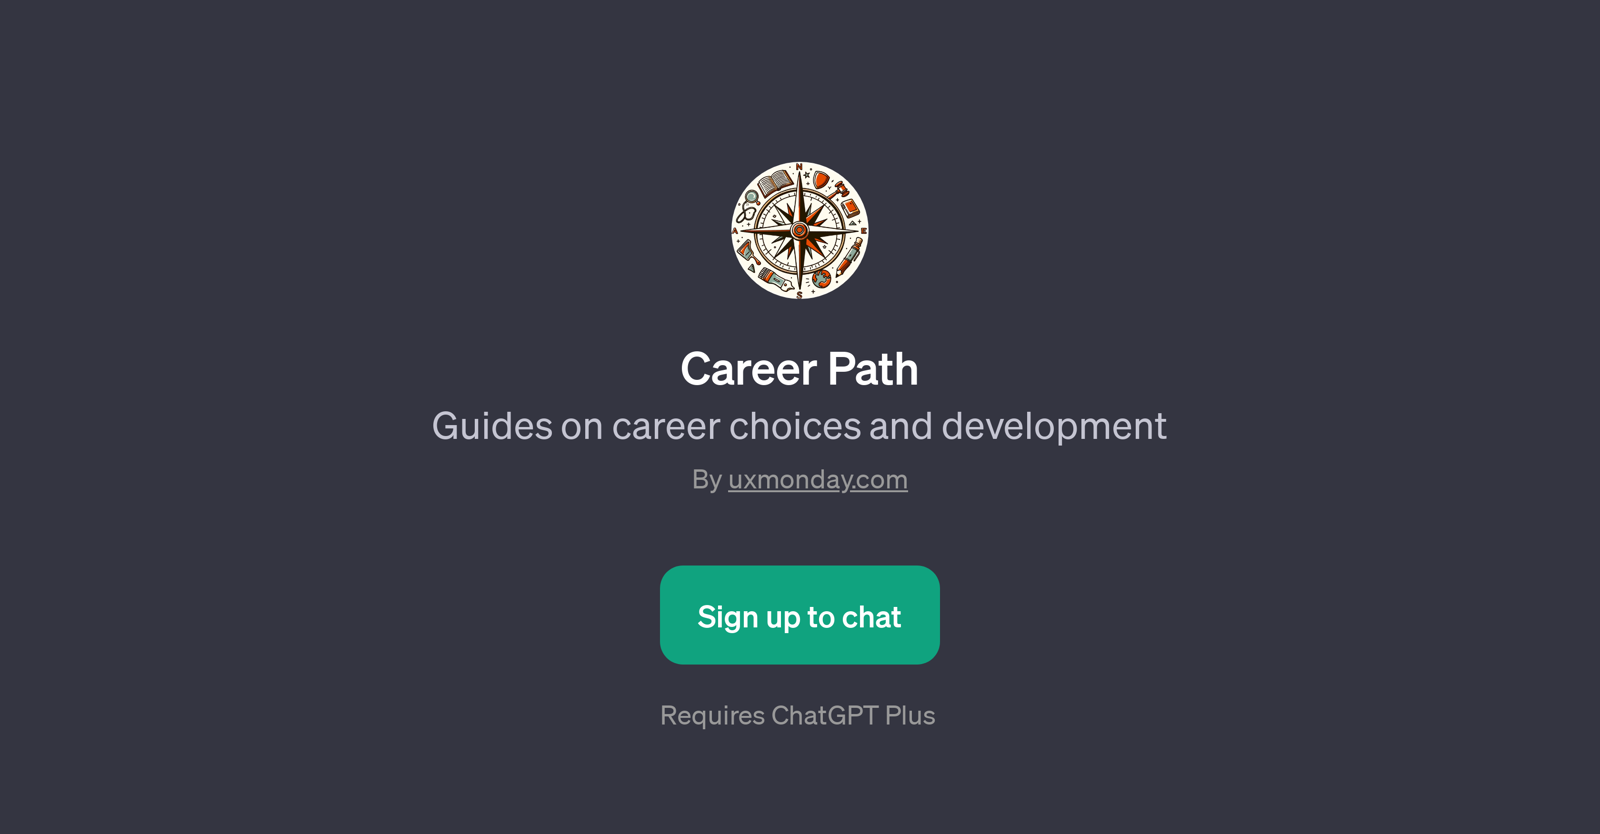 Career Path website